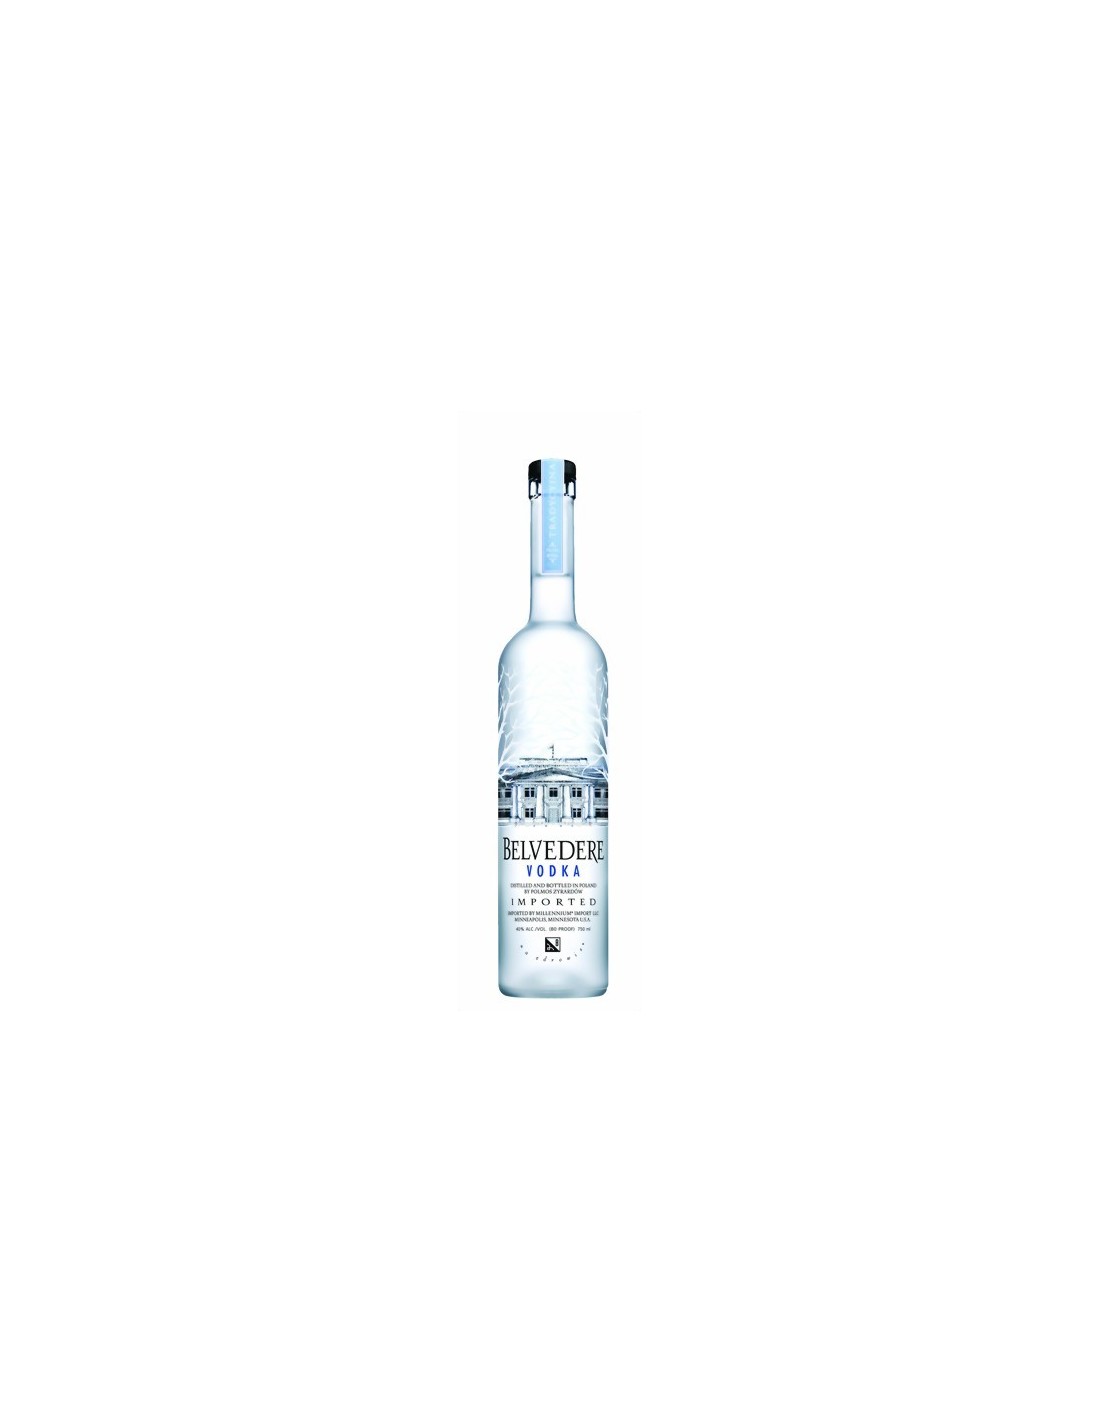 Vodca Belvedere 3L, 40% alc., Polonia alcooldiscount.ro